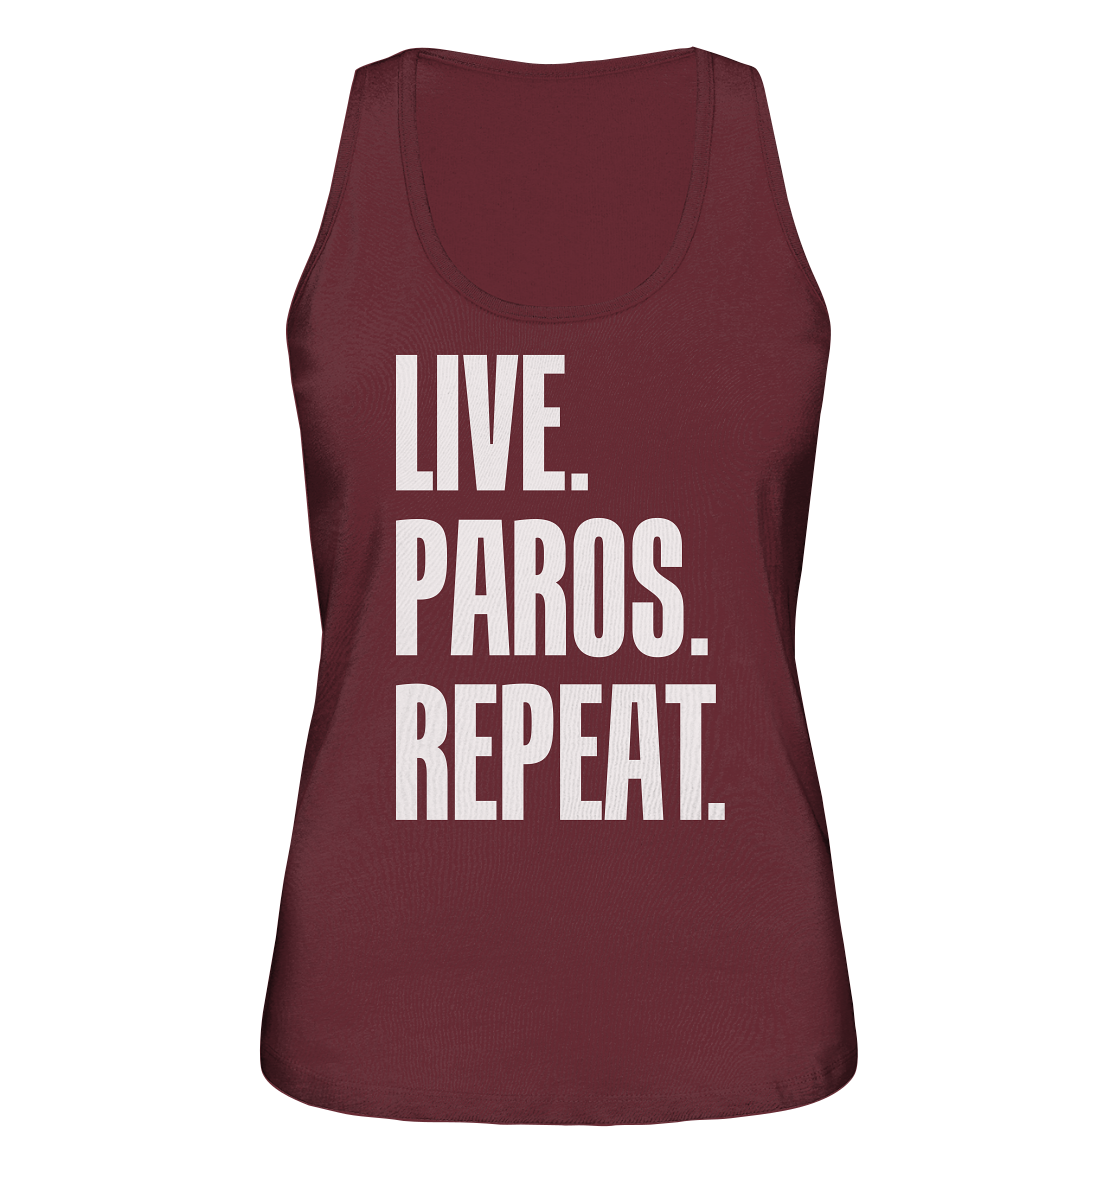 LIVE. PAROS. REPEAT. - Ladies Organic Tank-Top